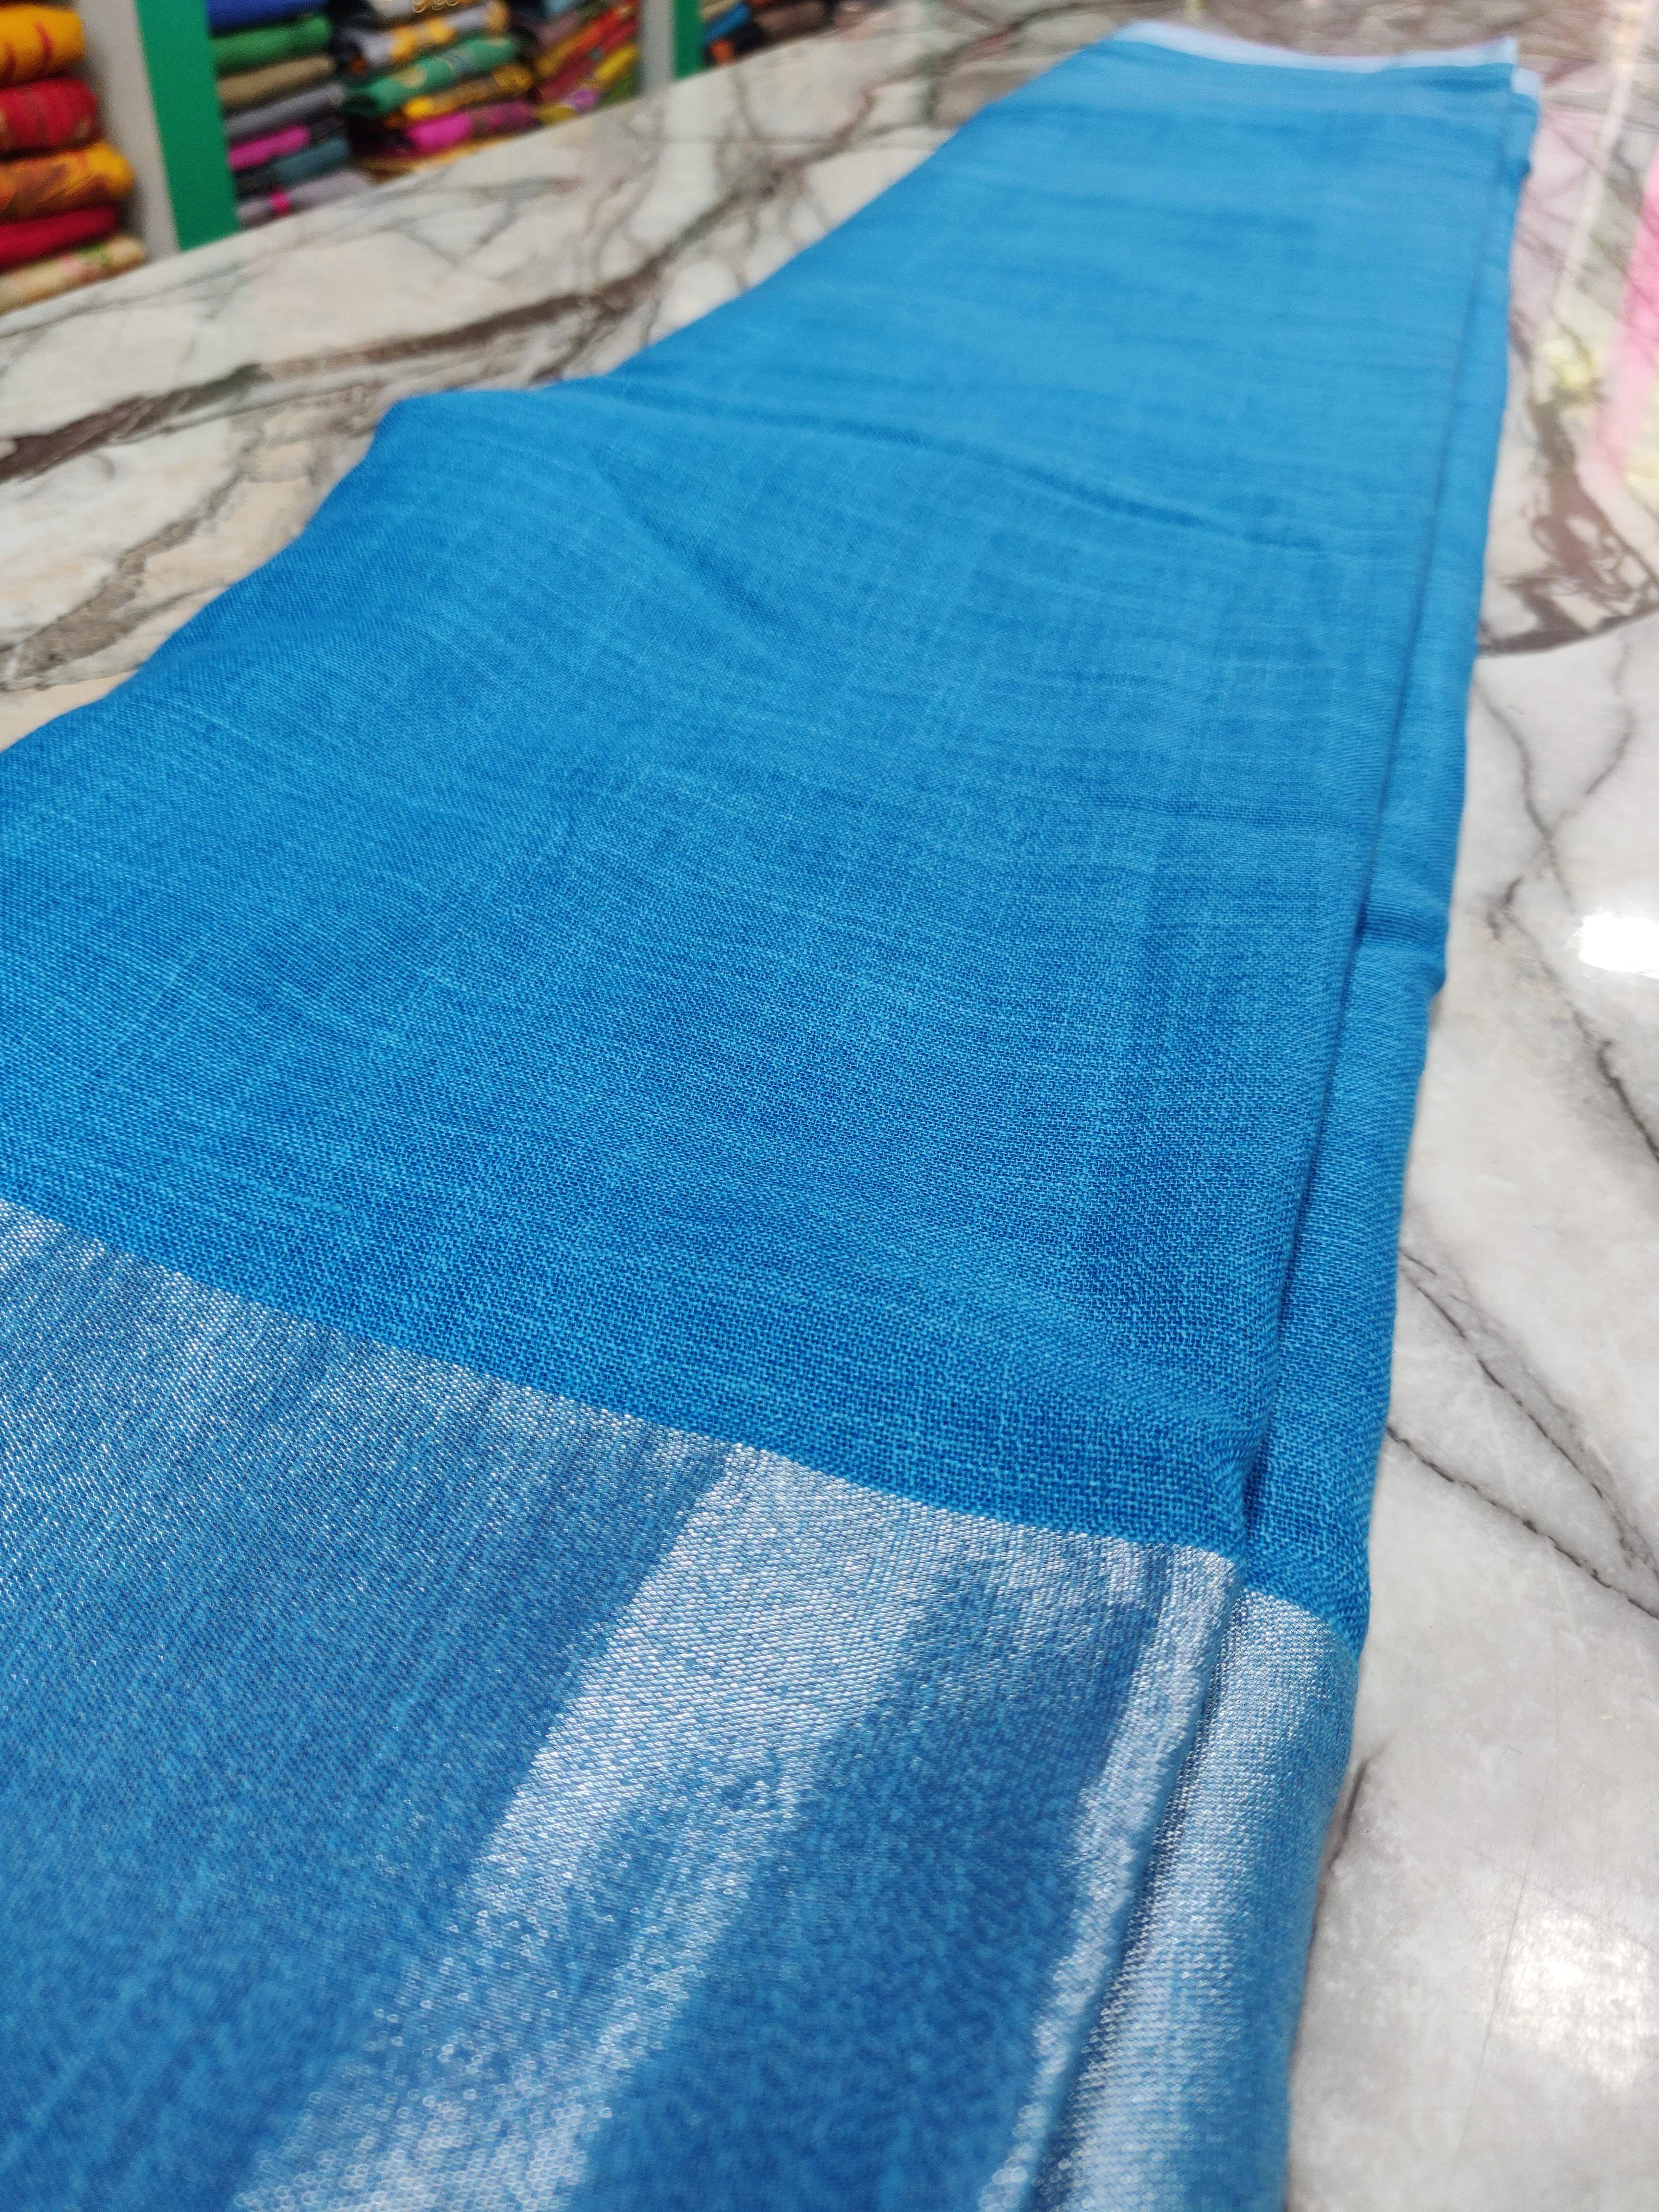 Blue,Turquoise,Aqua,Azure,Textile,Linens,Woven fabric,Electric blue,Table,Turquoise